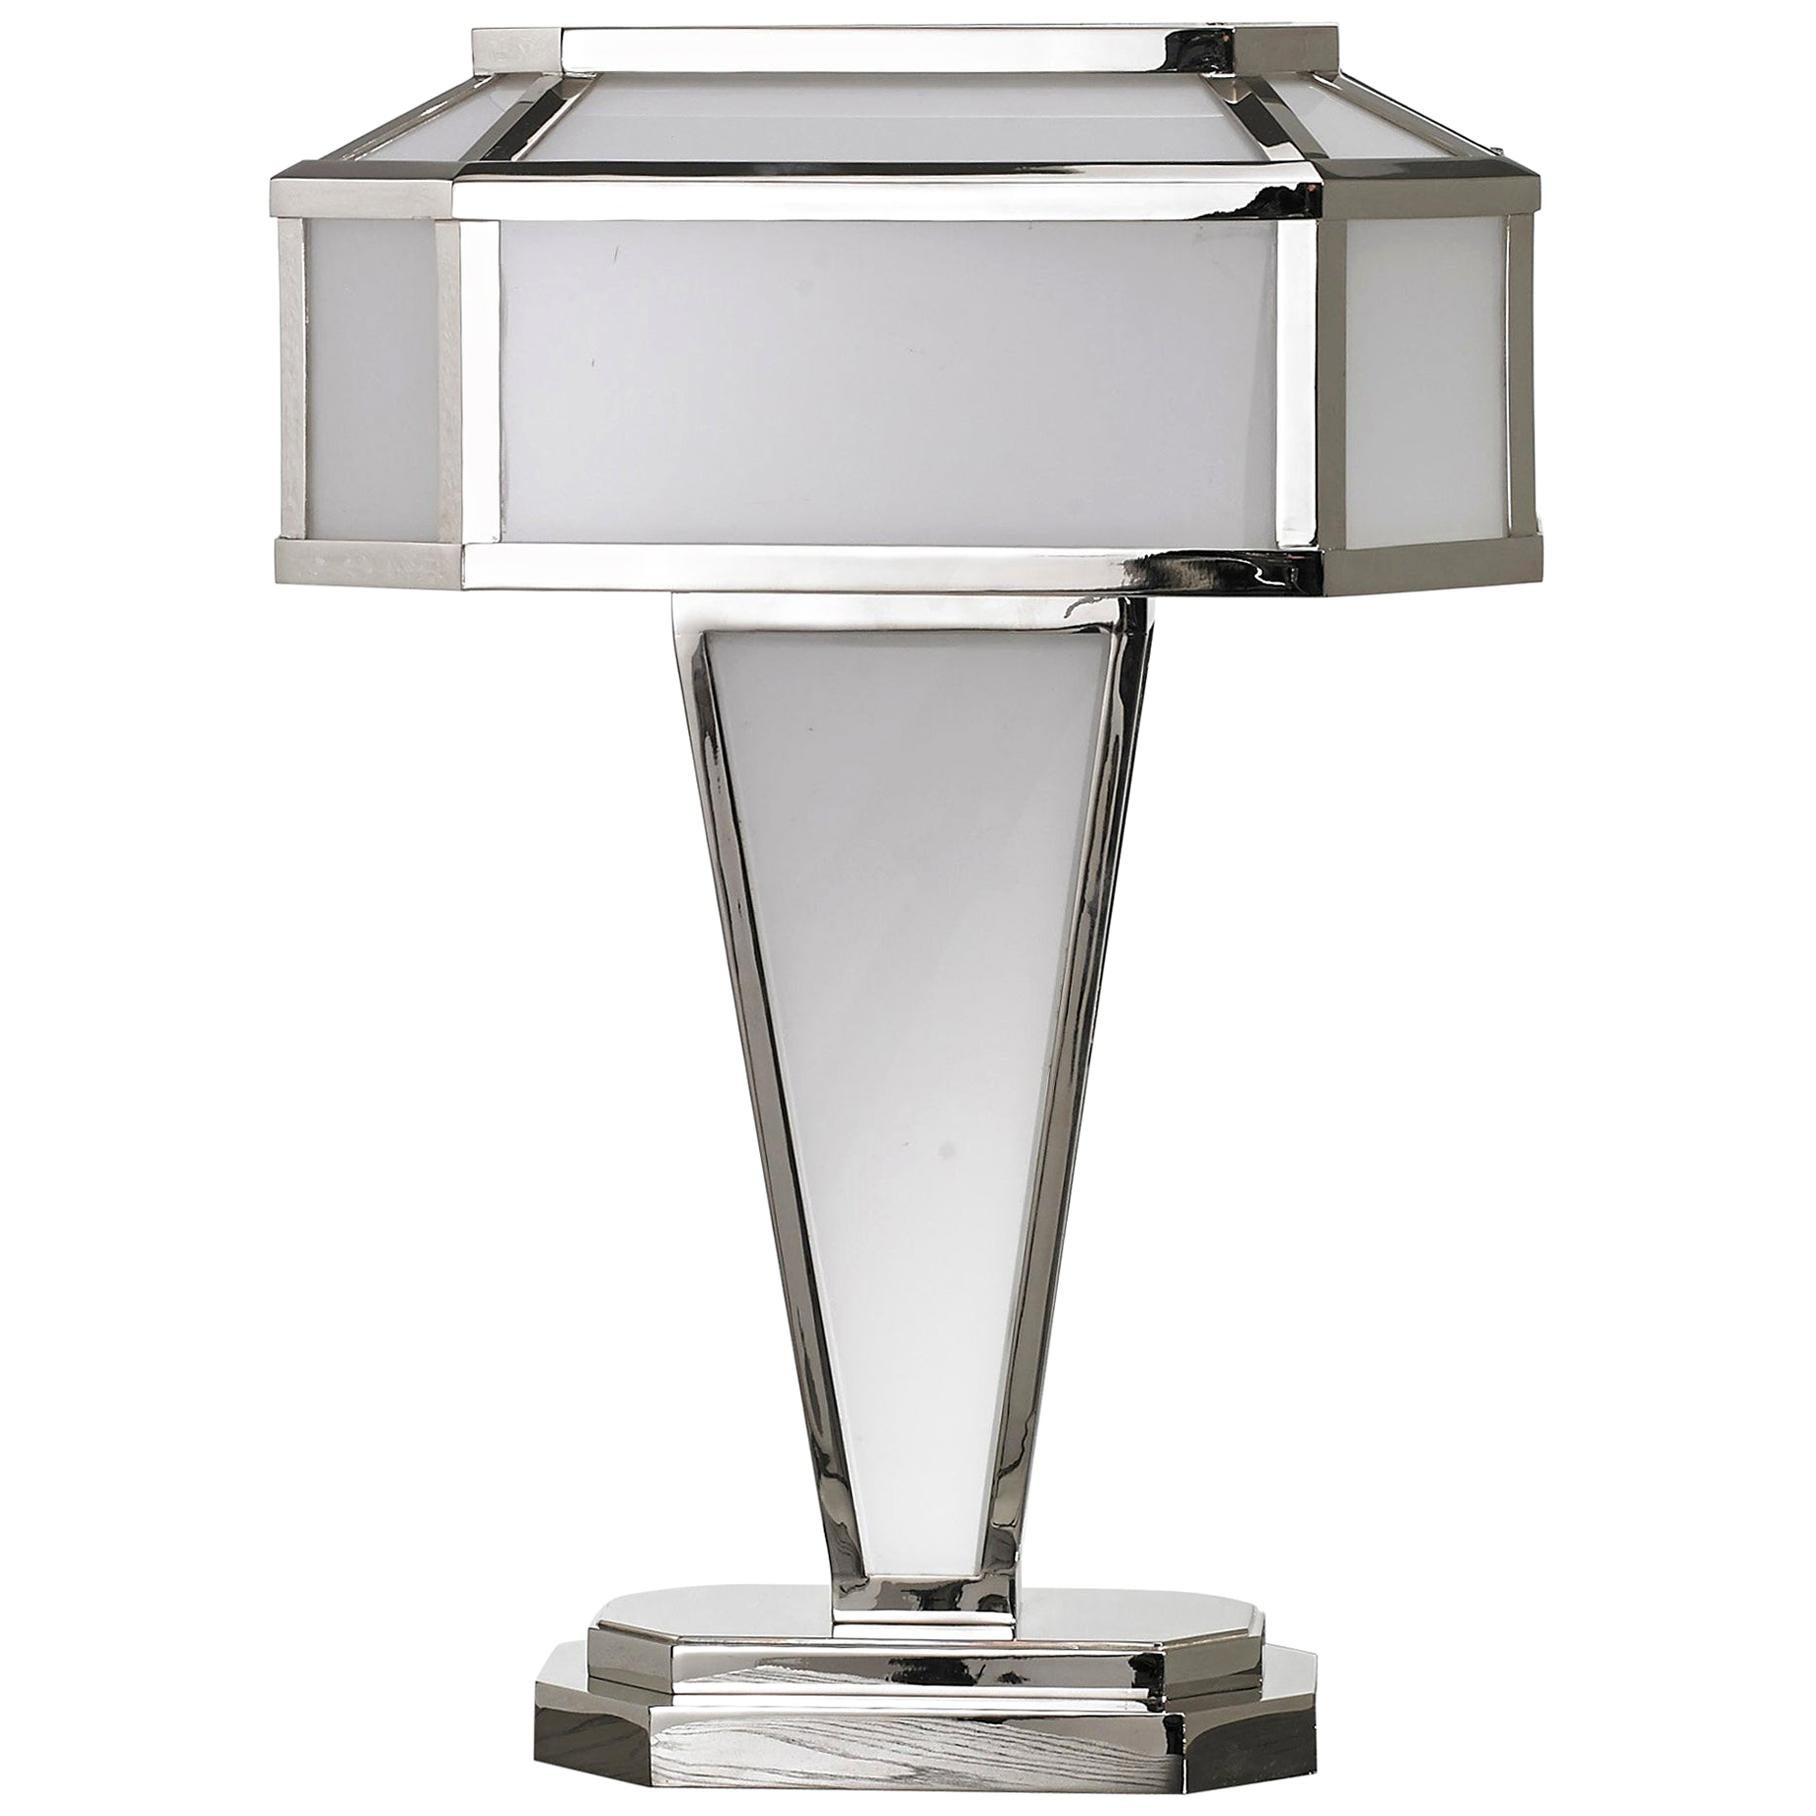 Art Deco Lamp For Sale